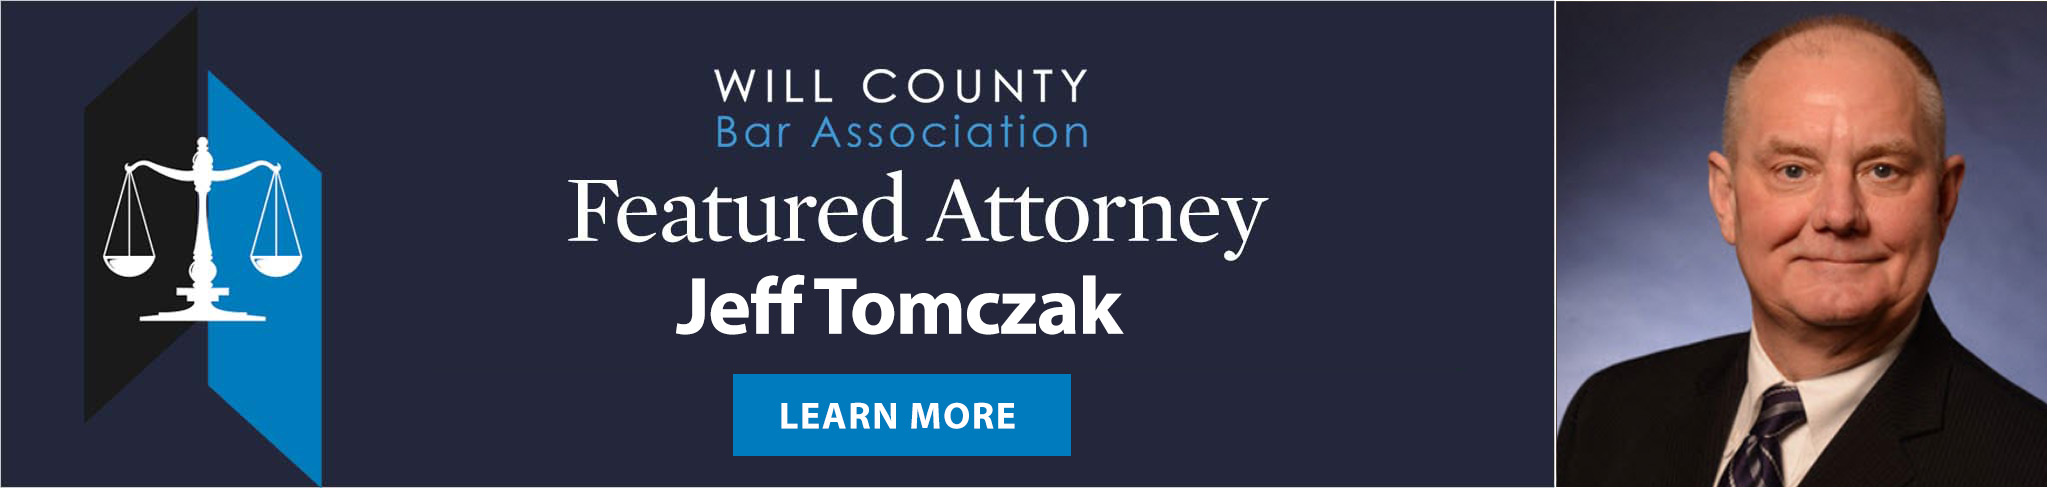 Feature Attorney Jeff Tomczak - Read More